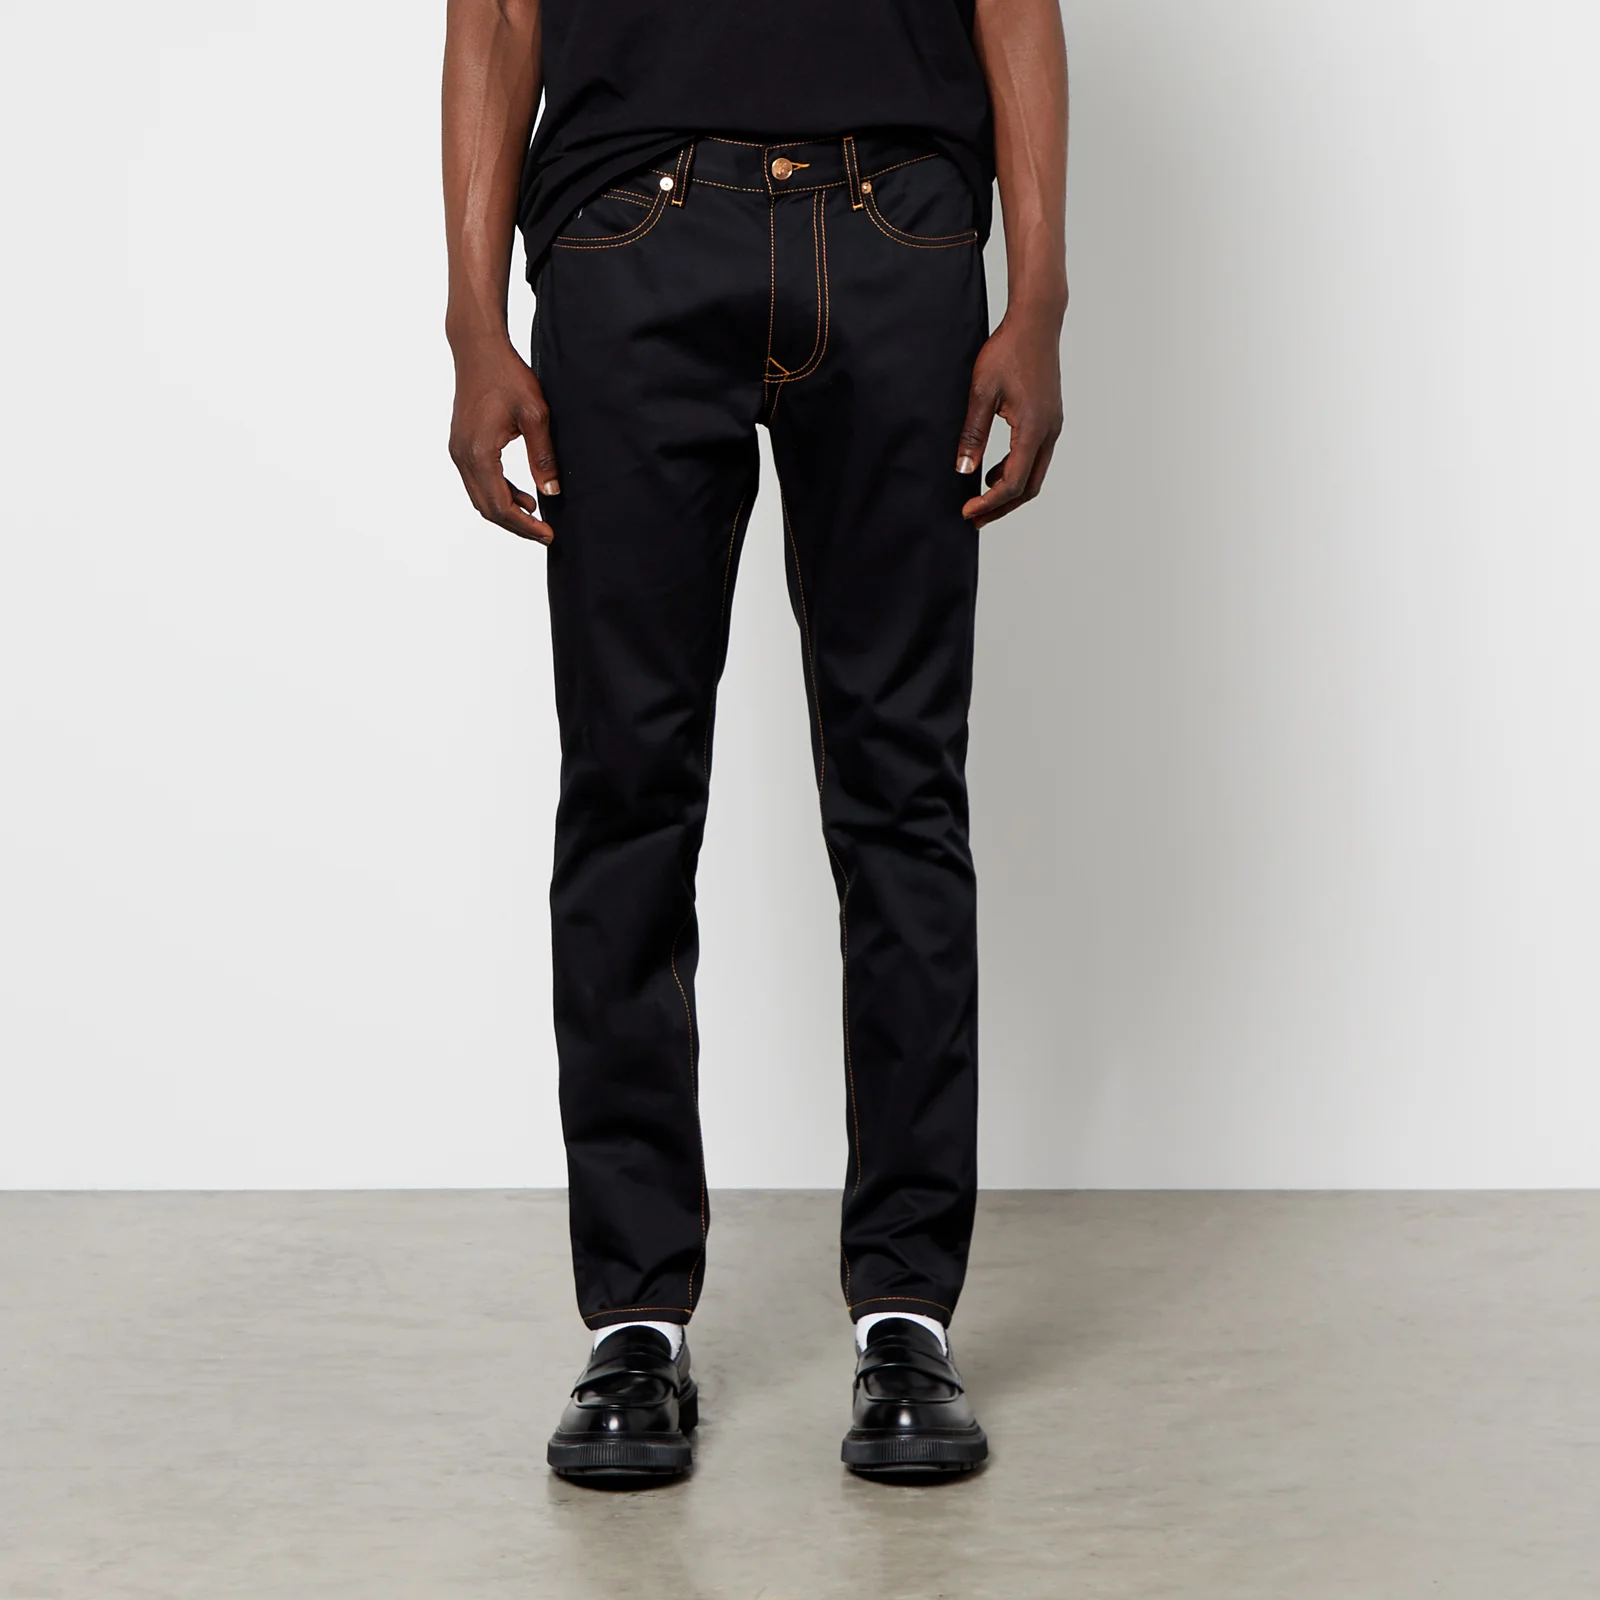 Vivienne Westwood Men's Classic Tapered Jeans - Black Image 1